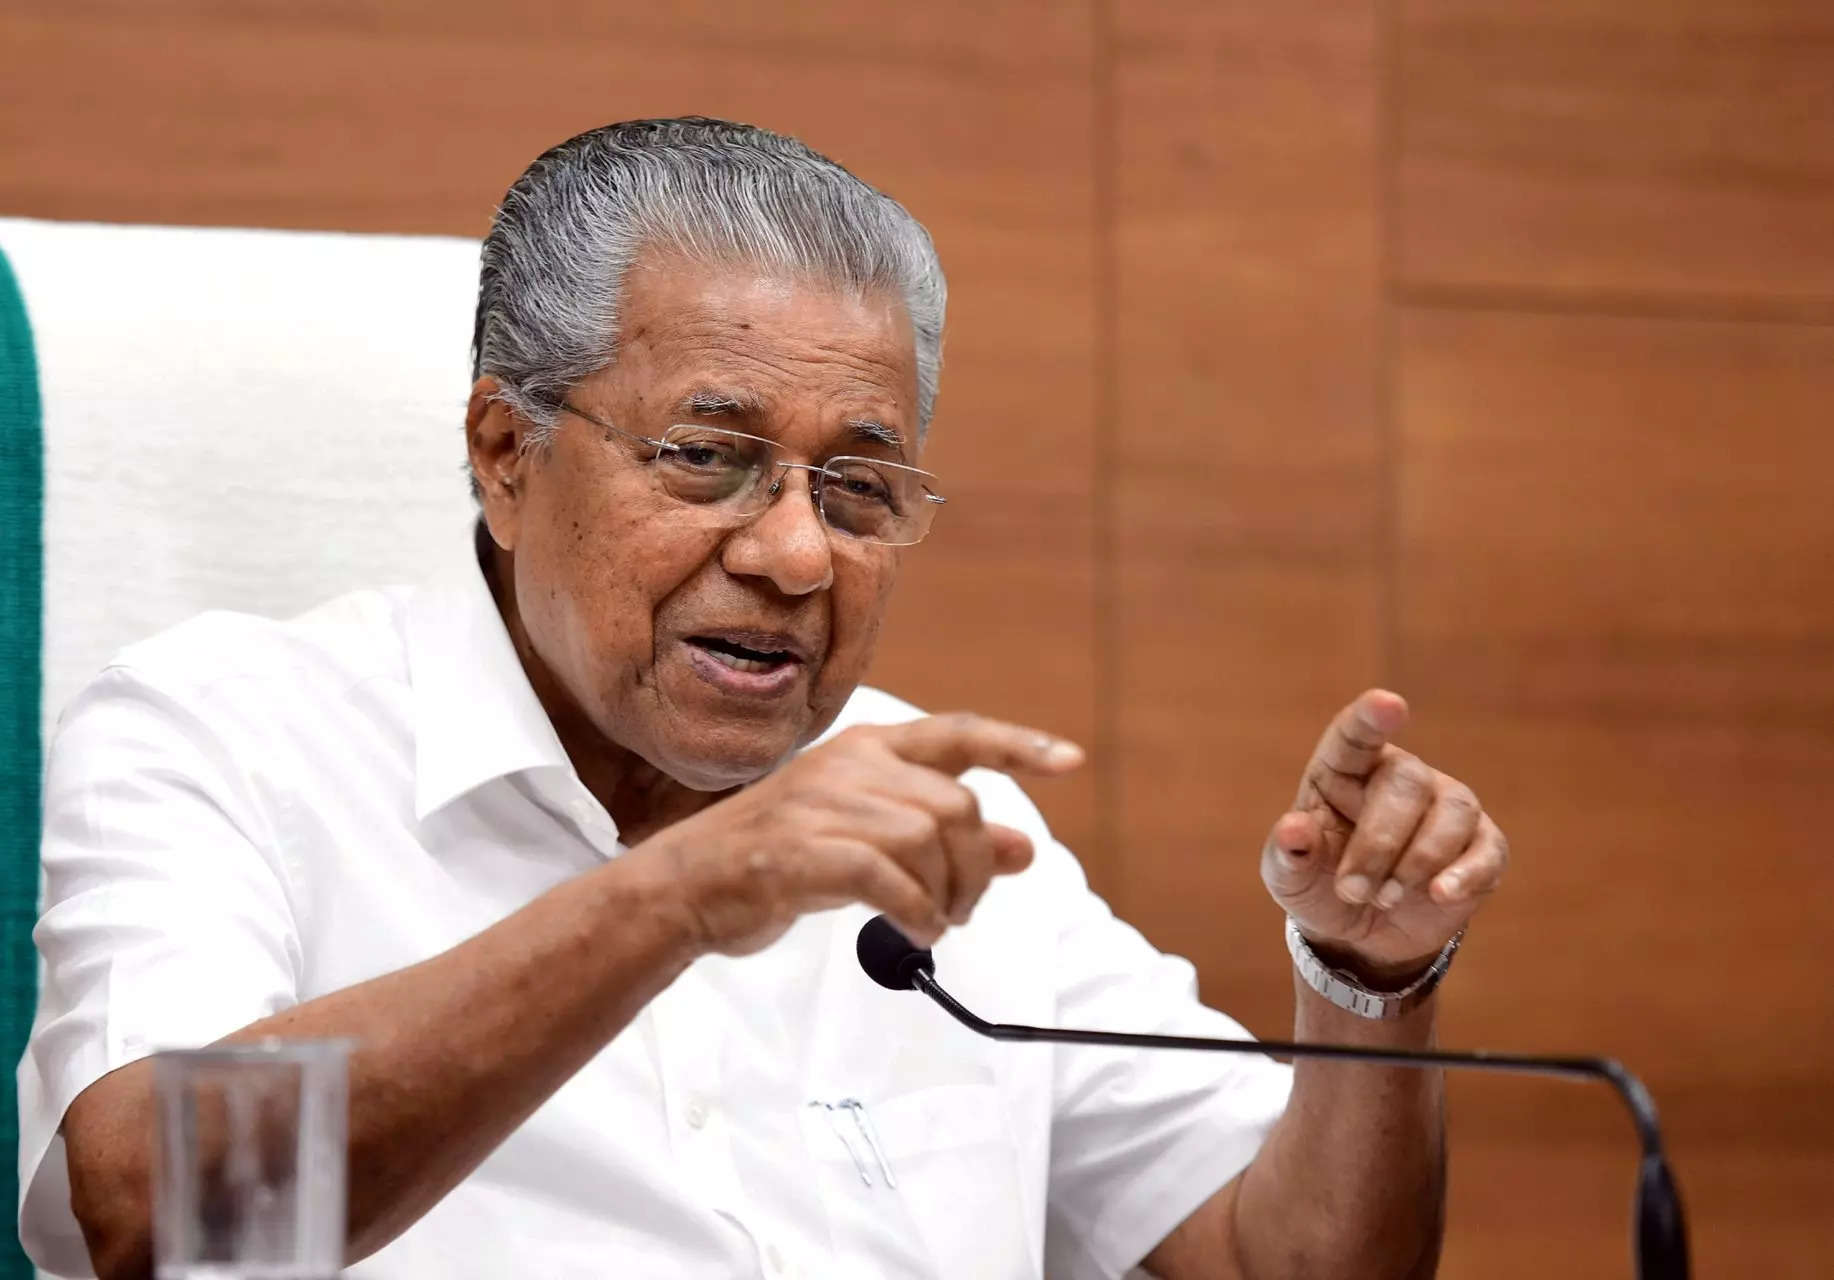 “It’s responsibility of media to protect diversity”: Kerala CM